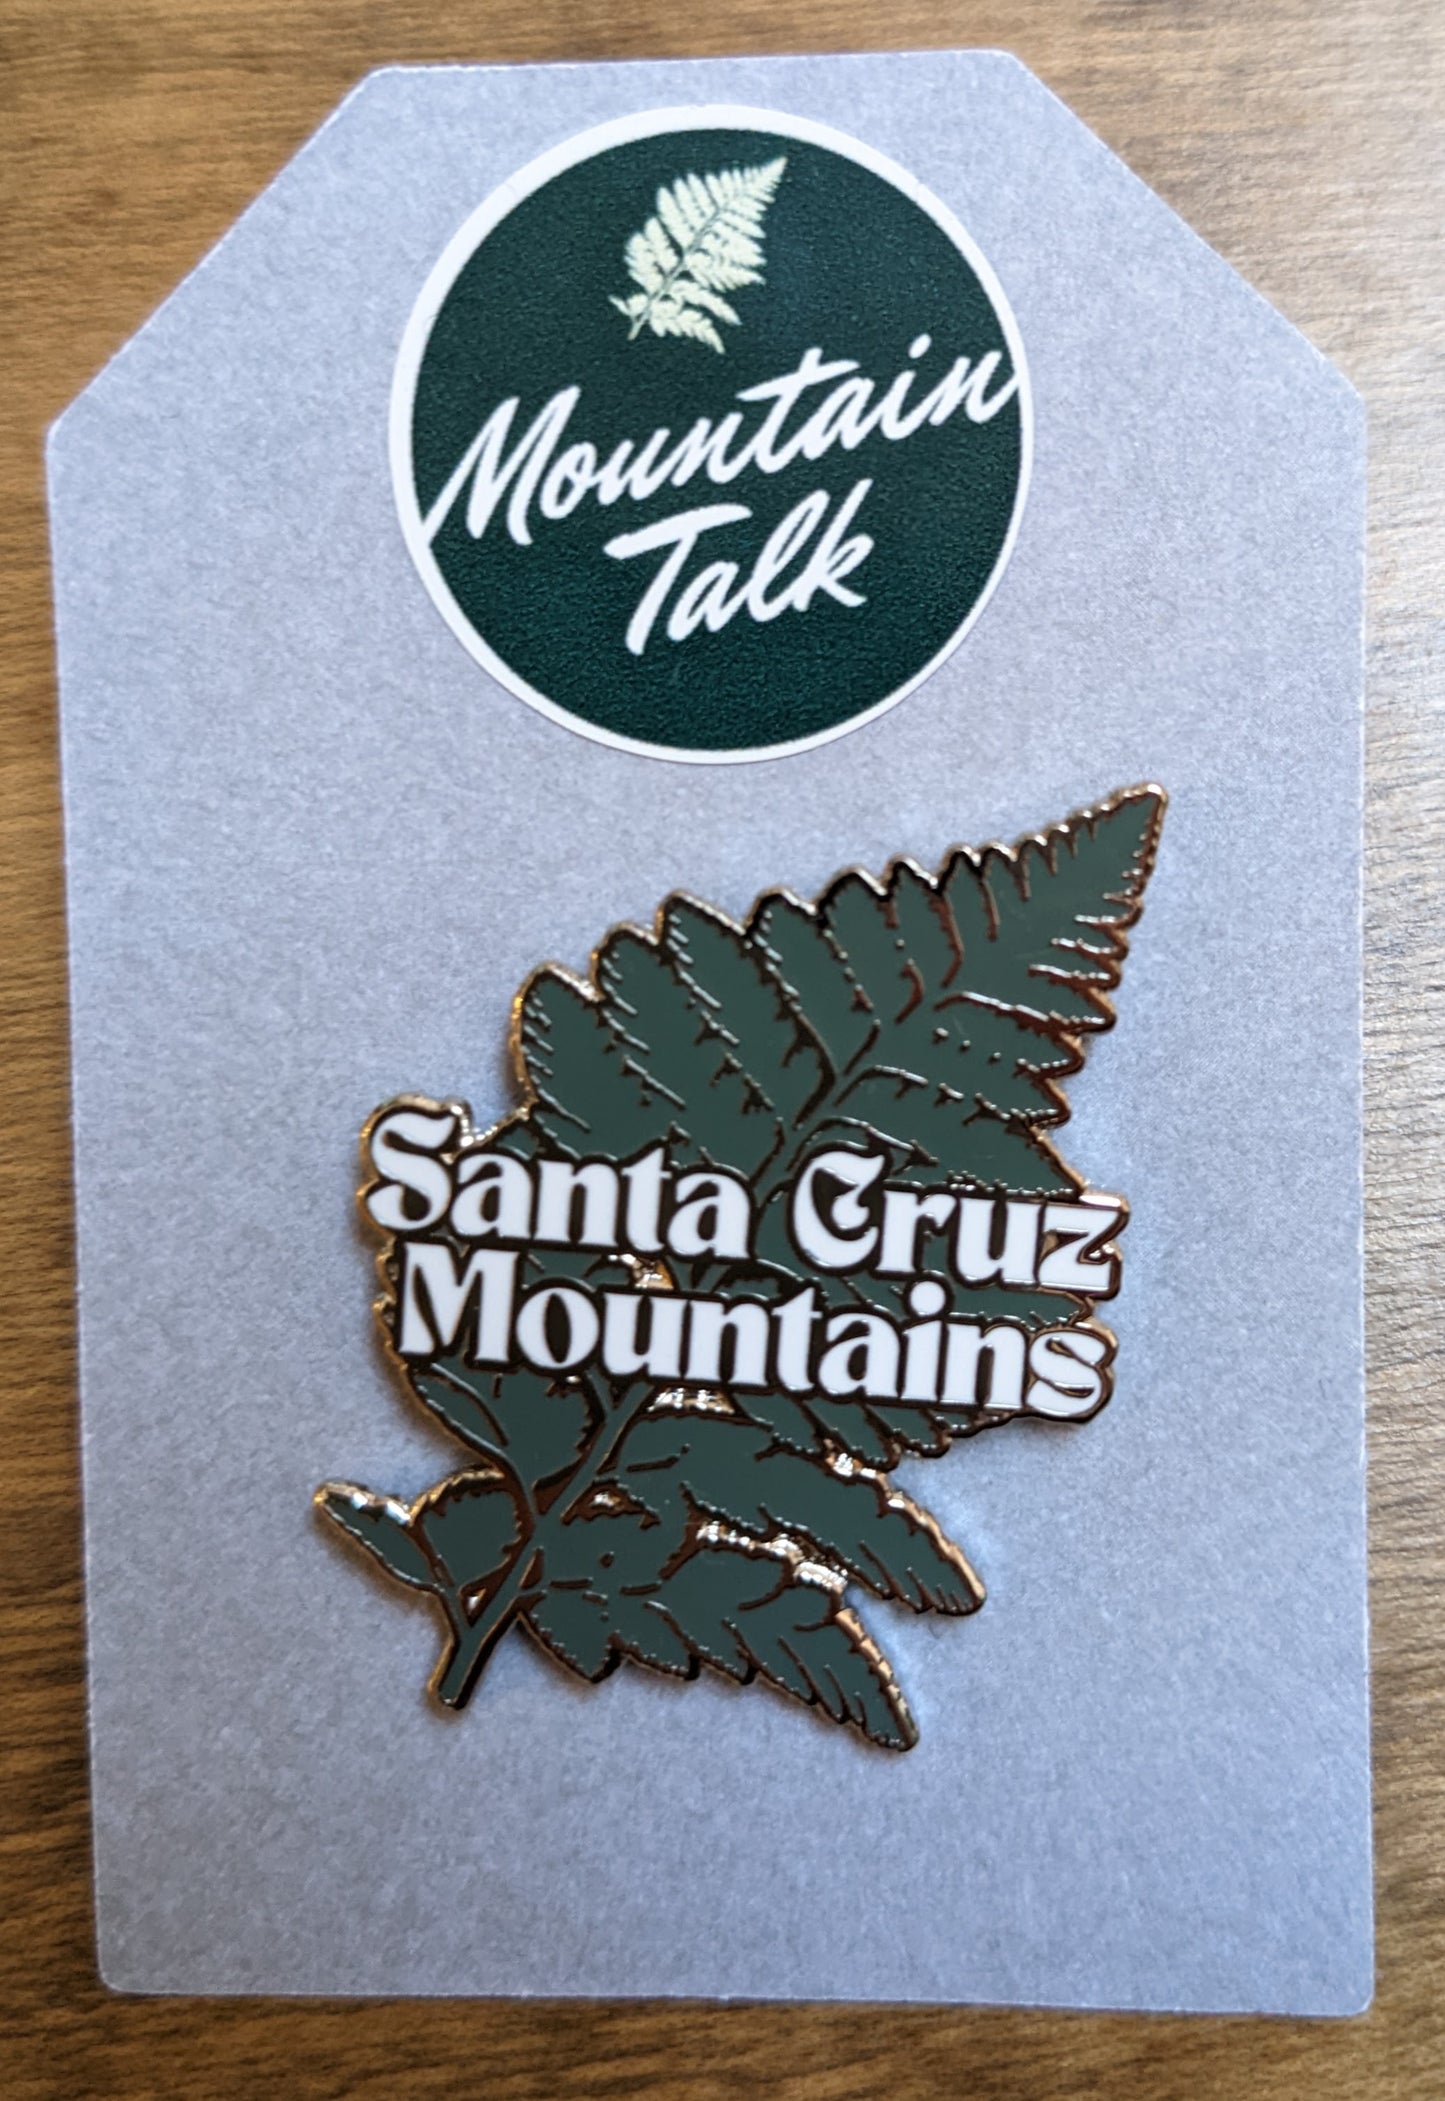 Santa Cruz Mountains pin by Mountain Talk with Fern design